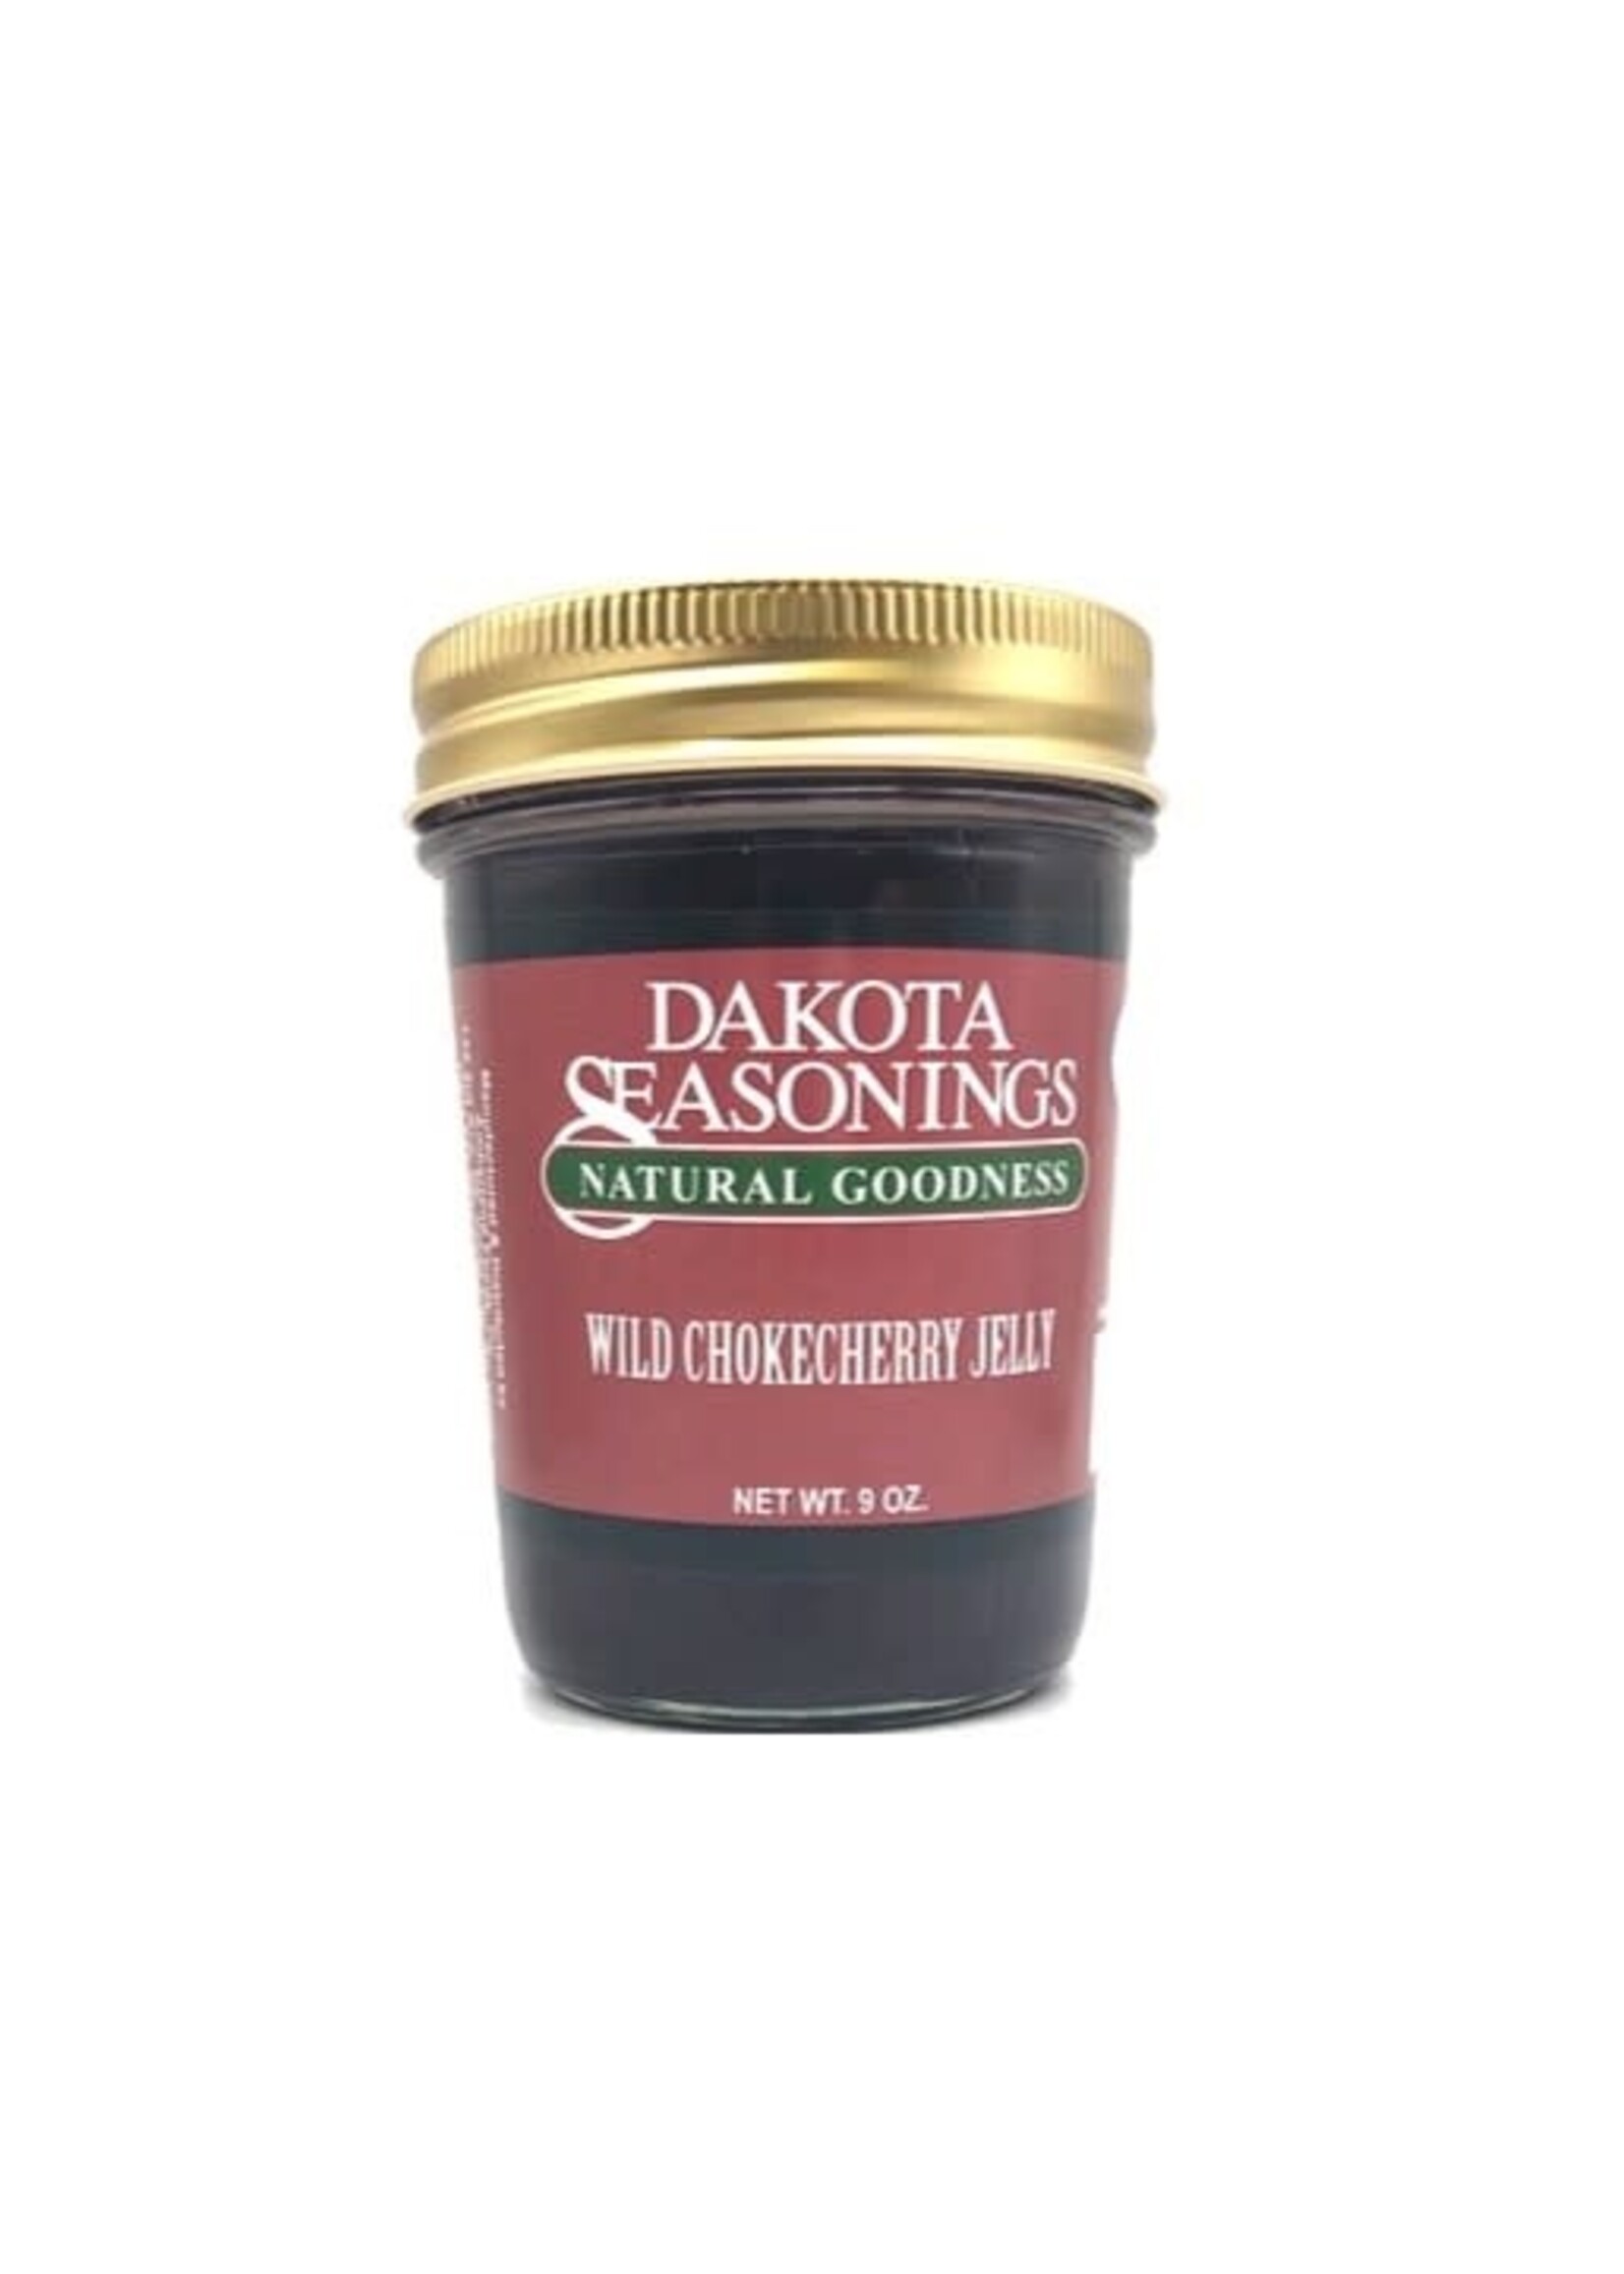 Dakota Seasonings Wild Chokecherry Jelly 9.0oz